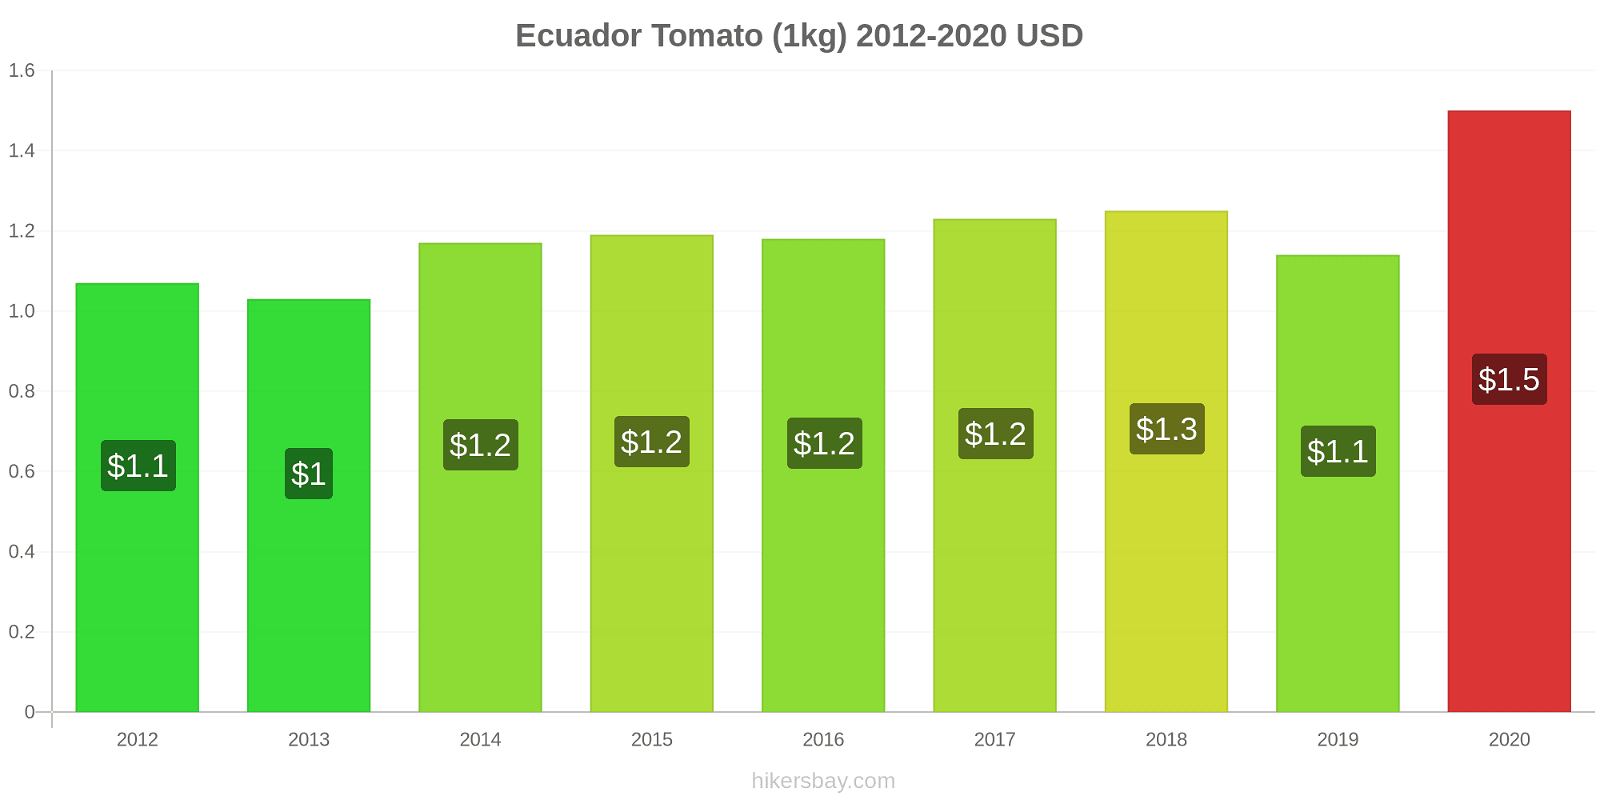 Ecuador price changes Tomato (1kg) hikersbay.com